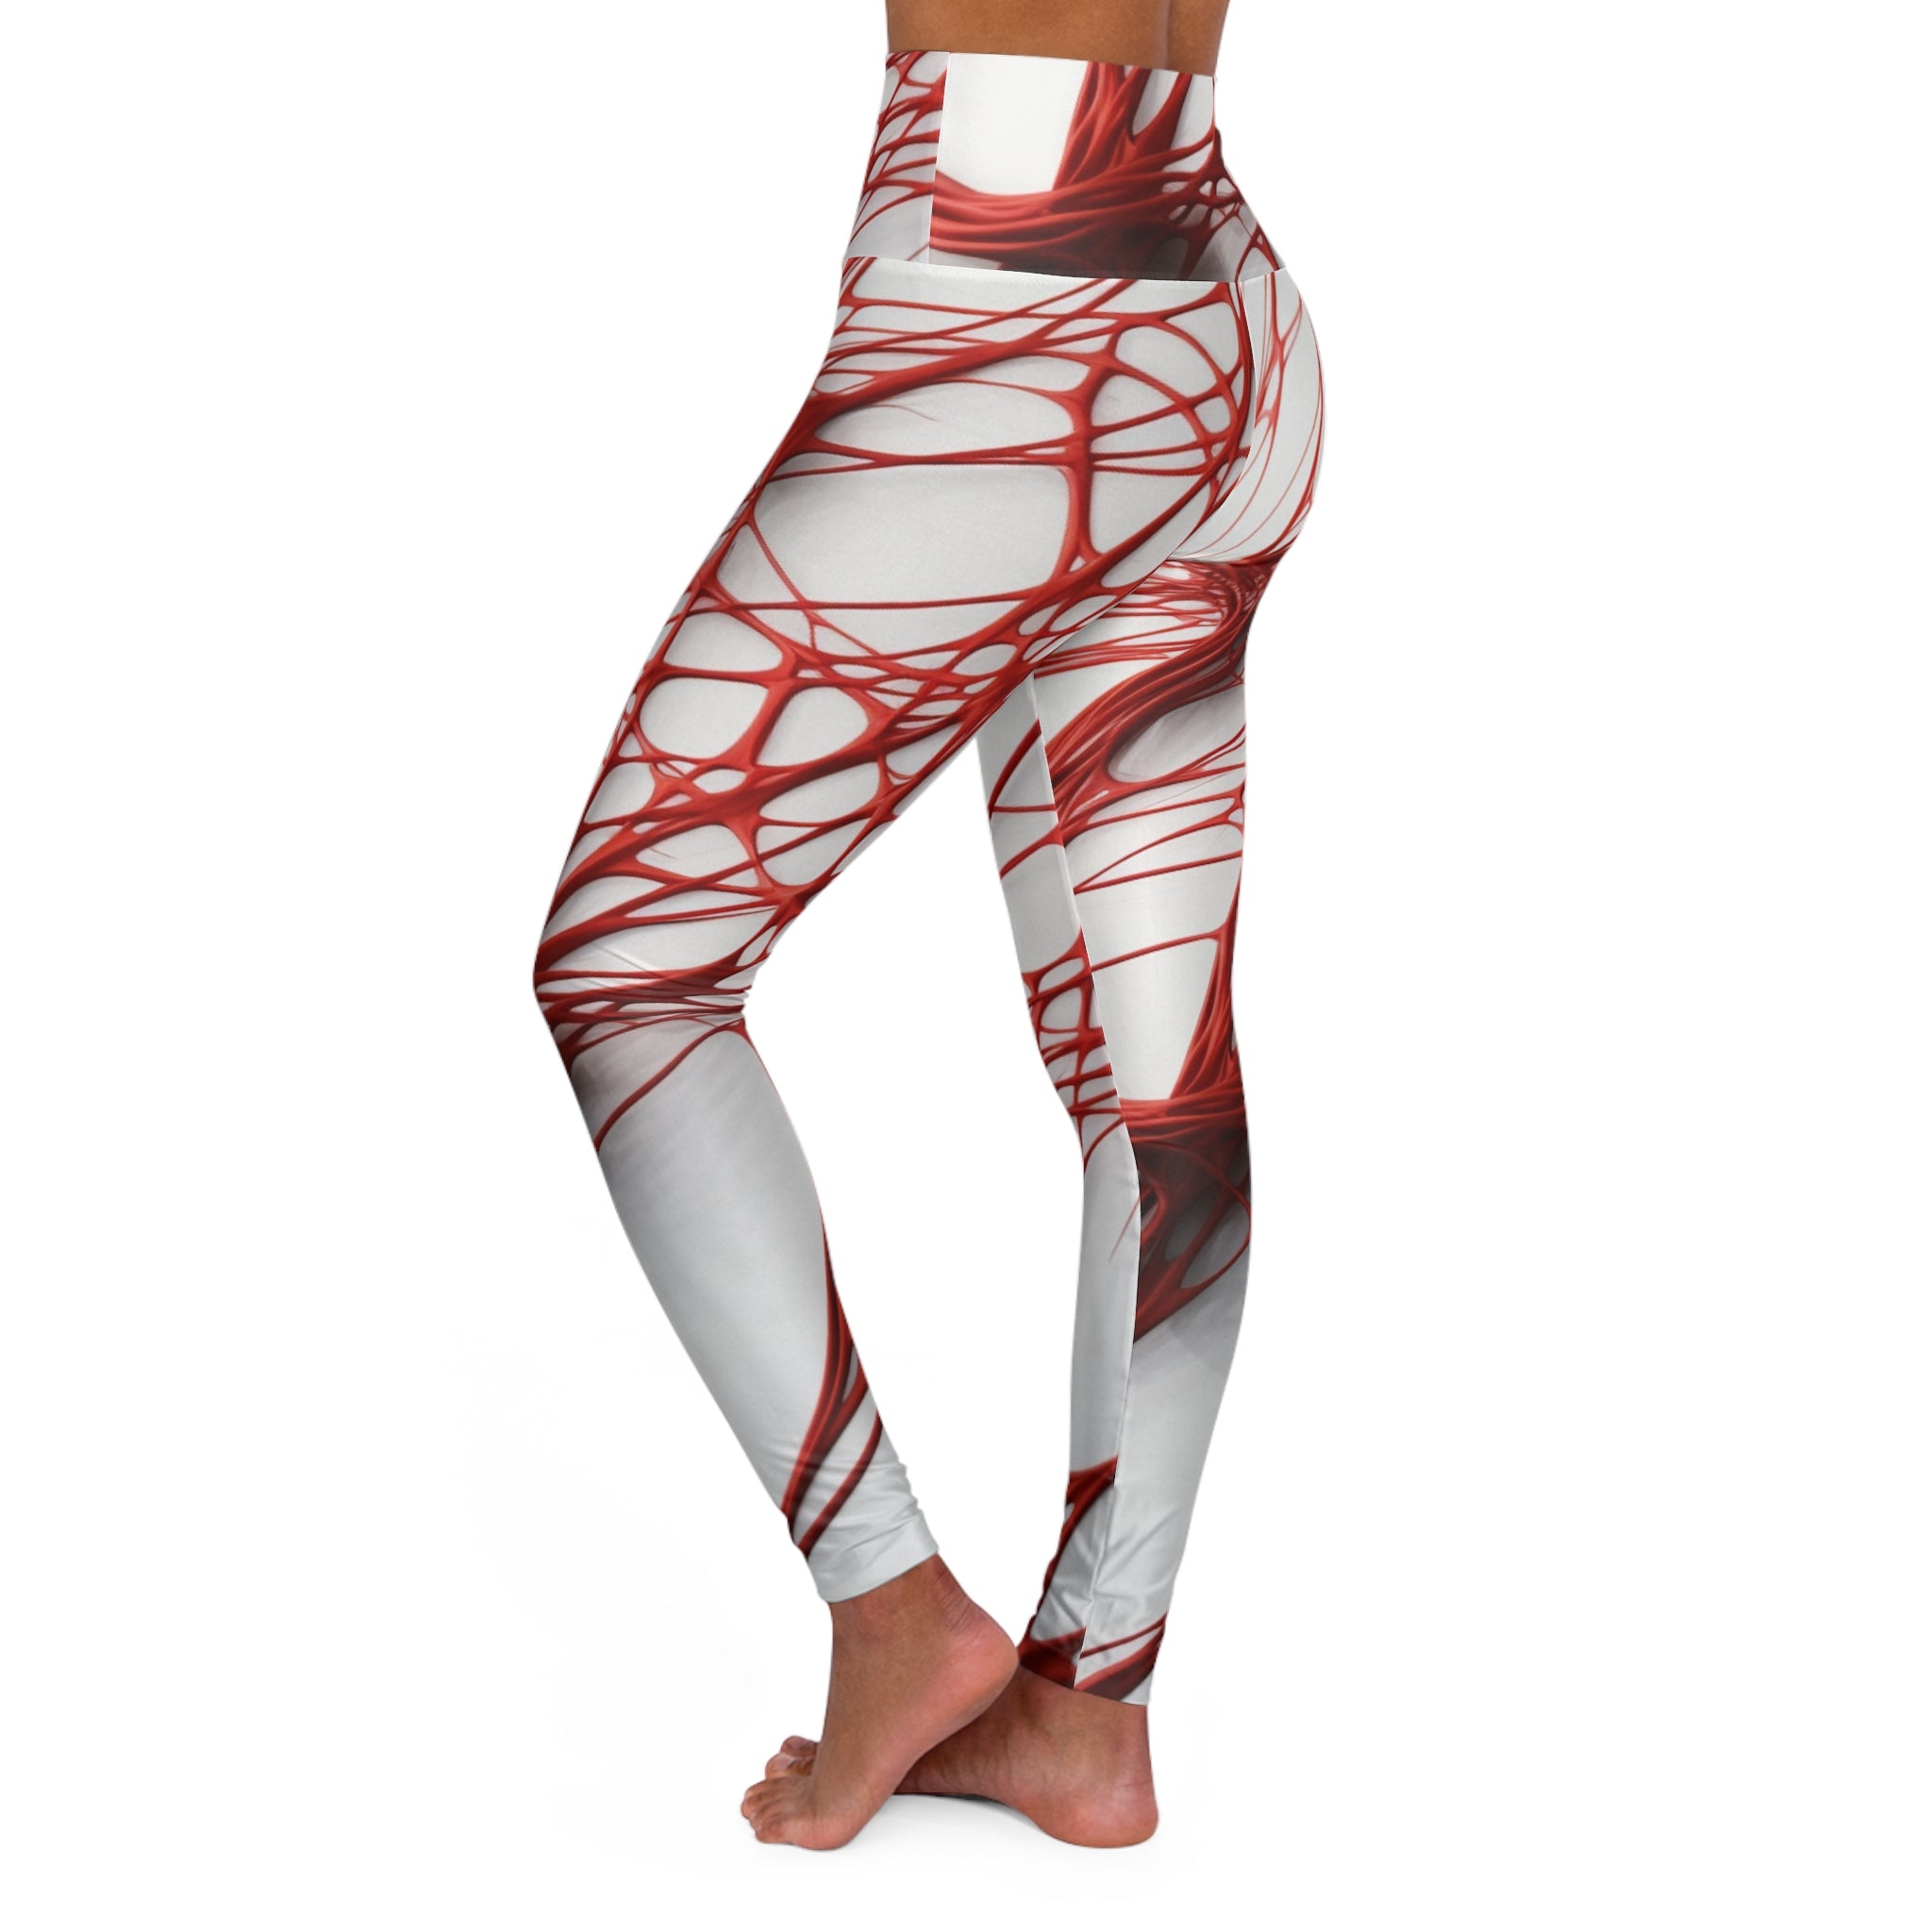 White & Red Gym Leggings for Women S-2XL - Sleek & Supportive